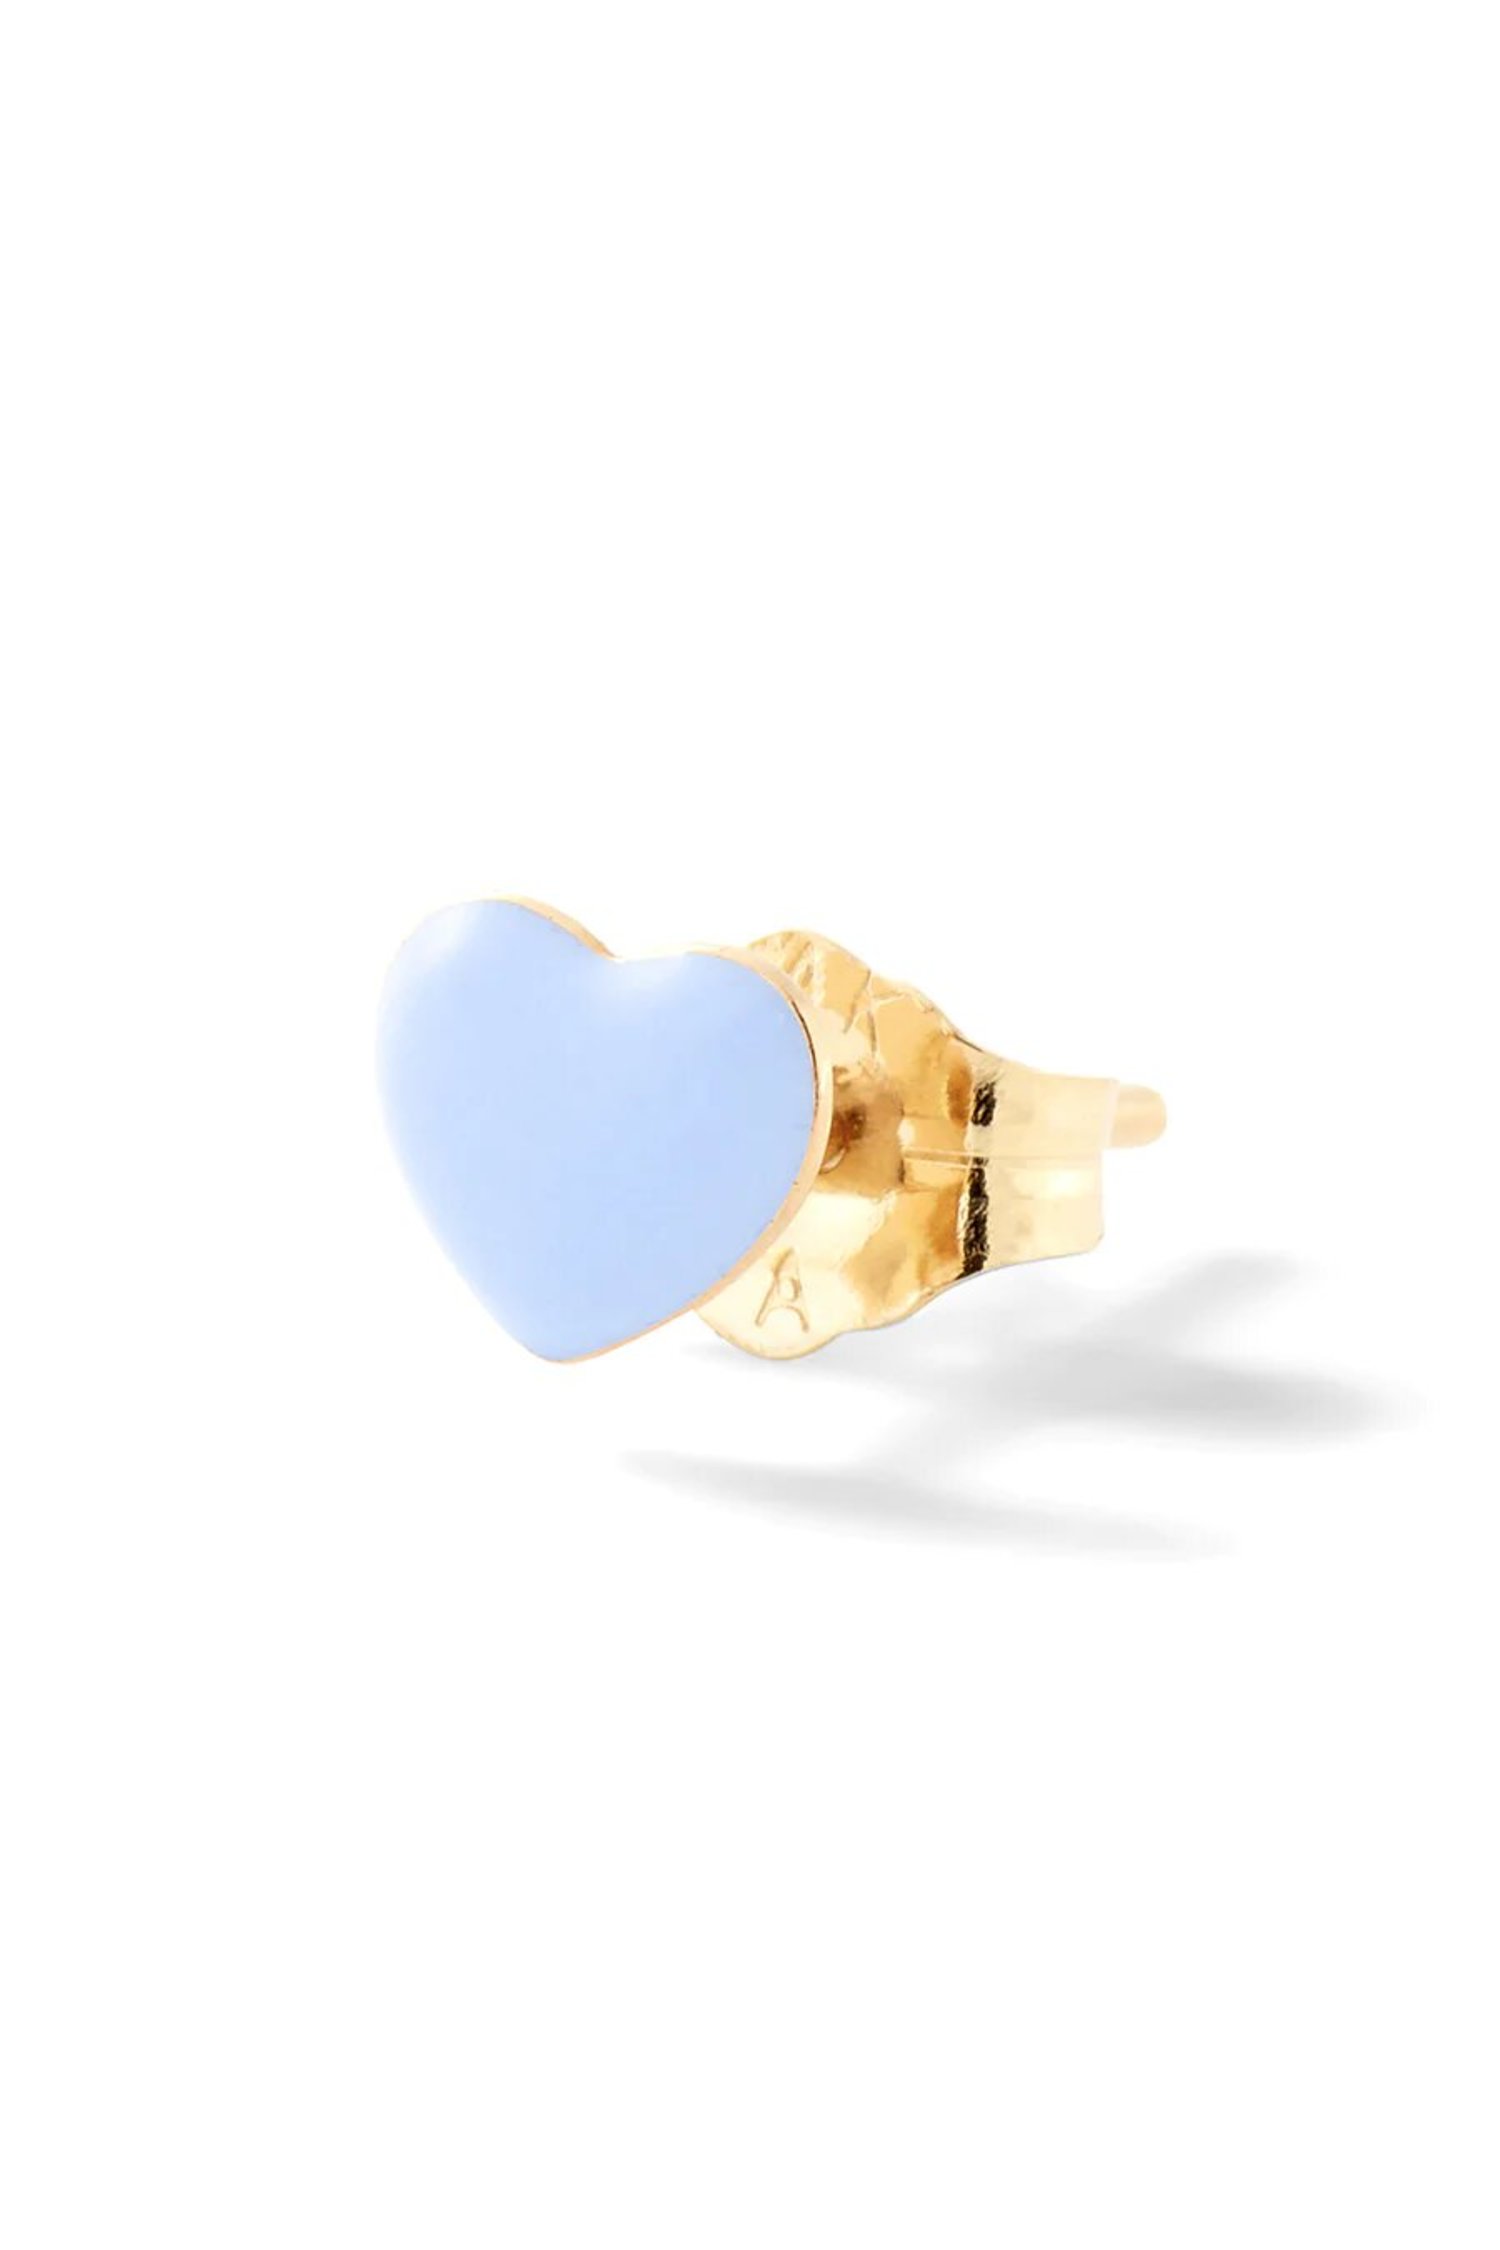 (Single) Mini Light Blue Puffy Heart Stud in 14K Yellow Gold